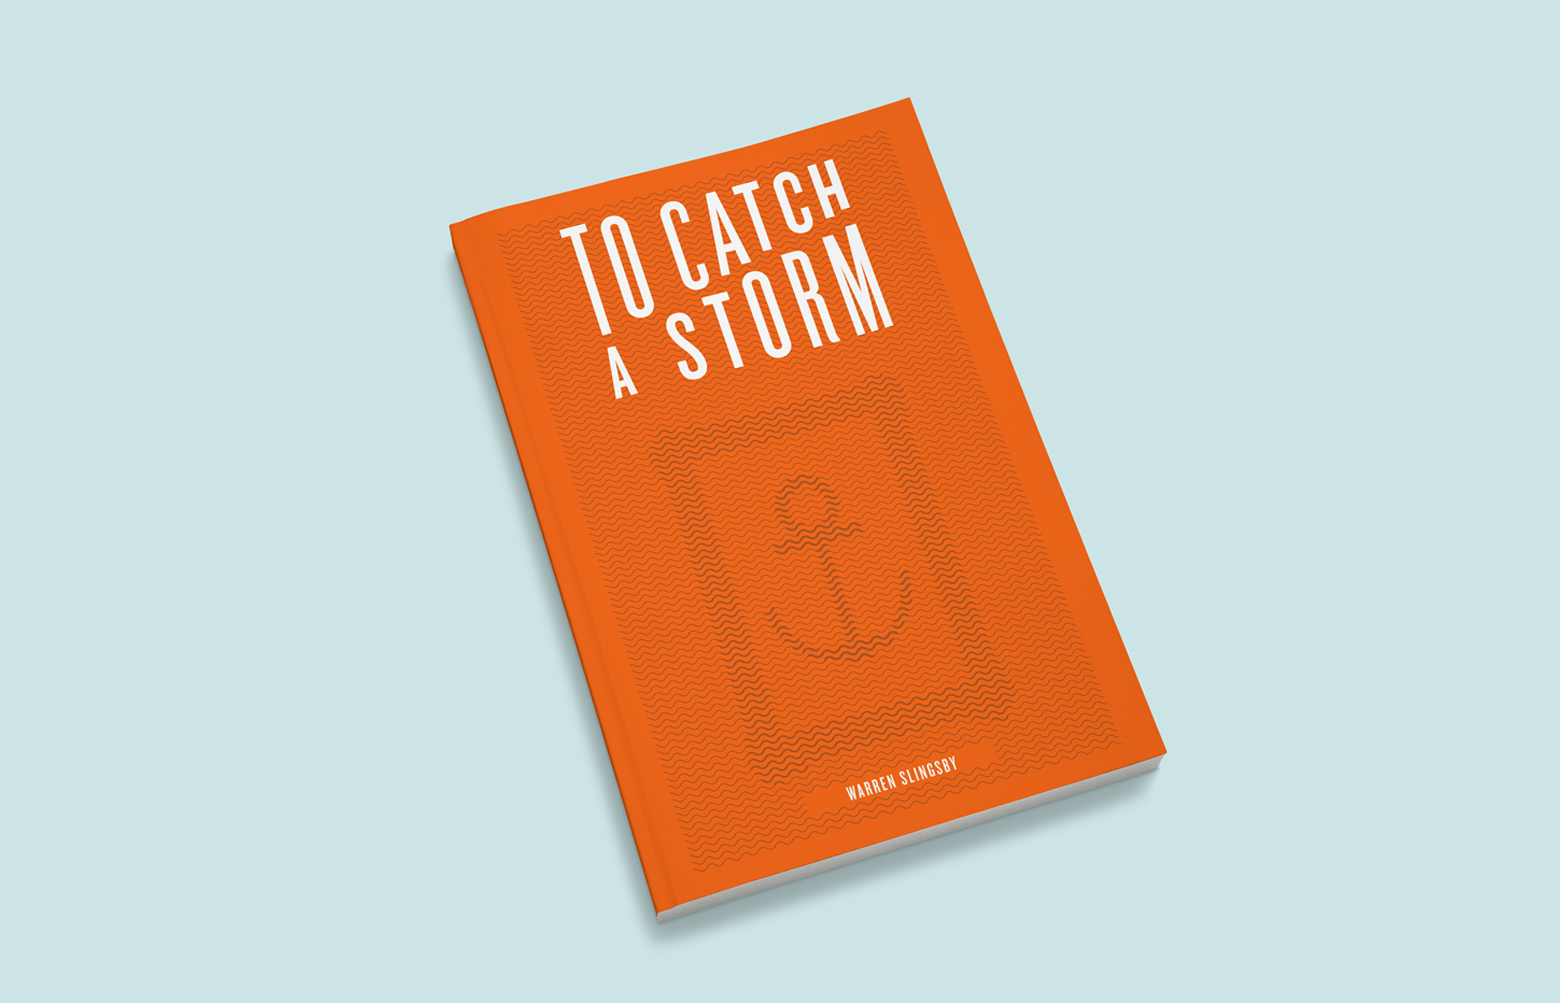 AND-Studio-ToCatchAStorm-Book-Cover-Orange-2